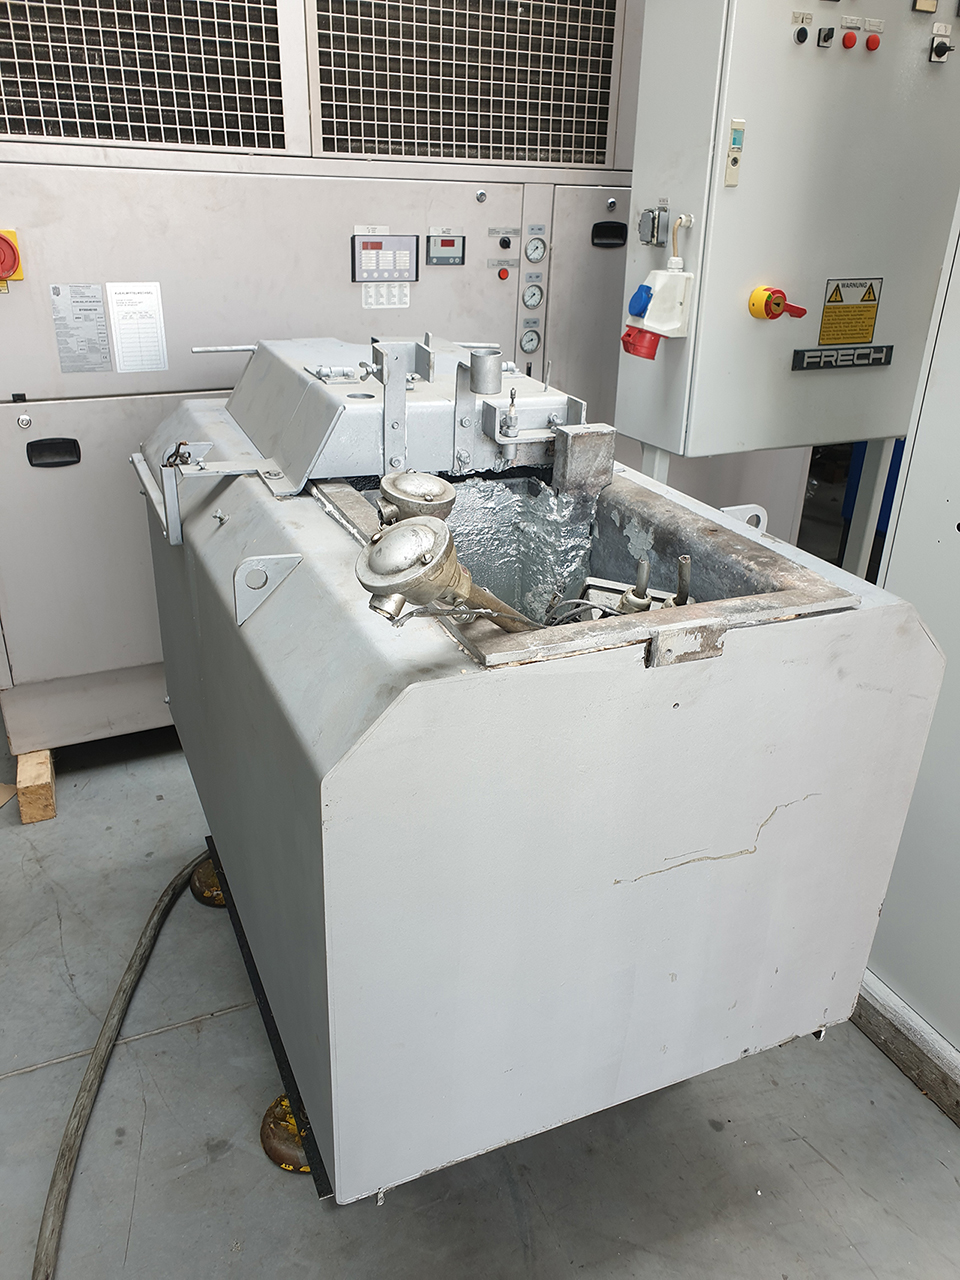 Reacondicionamiento de la máquina de fundición a presión de cámara caliente Frech DAW 80